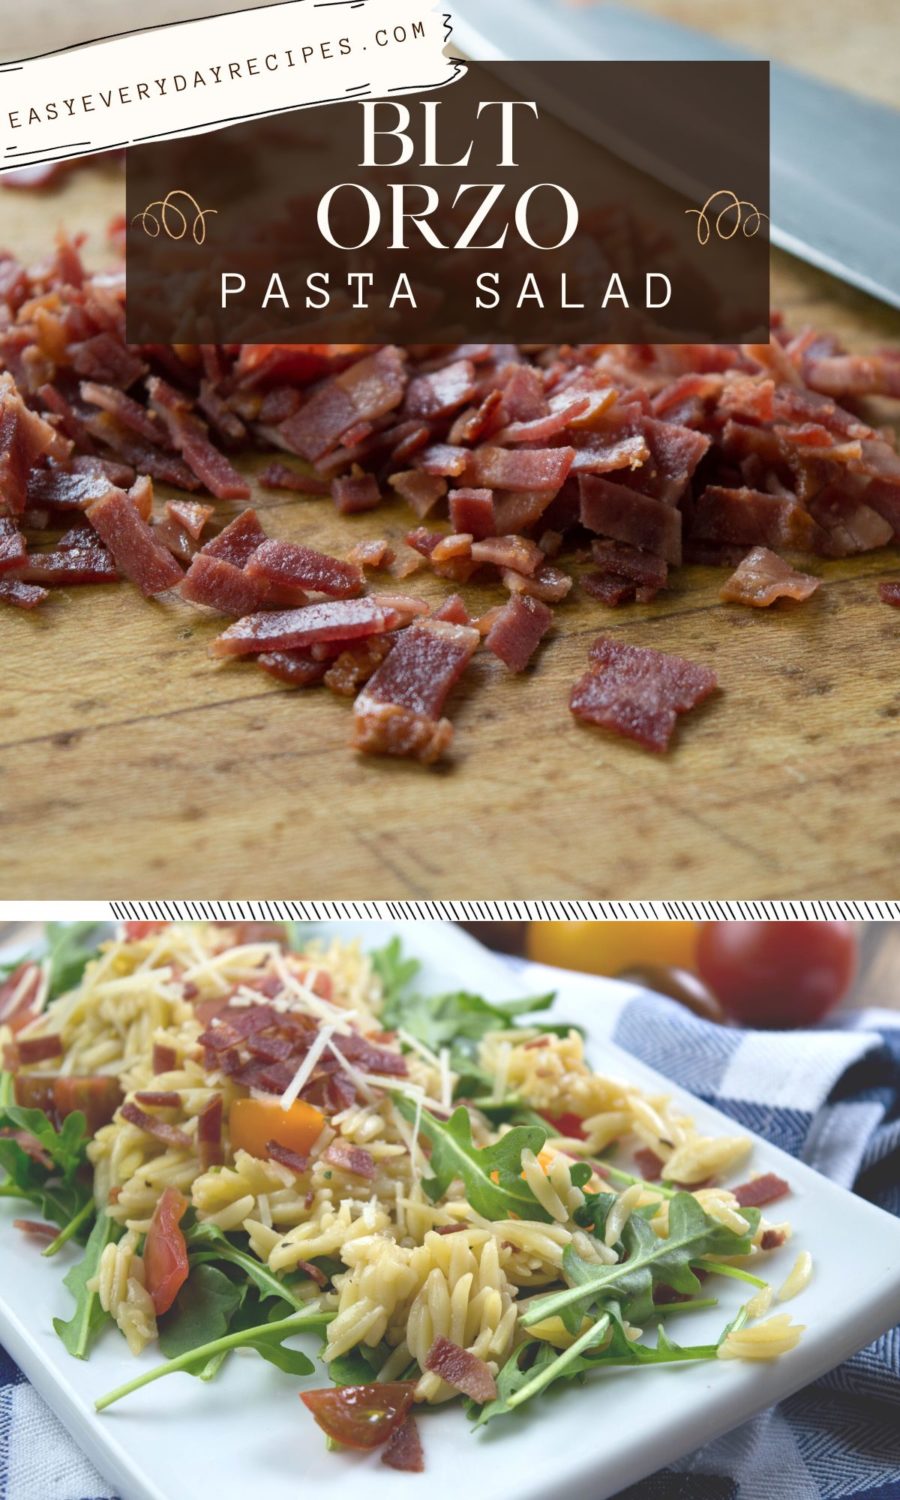 Bit orzo pasta salad with bacon and arugula.